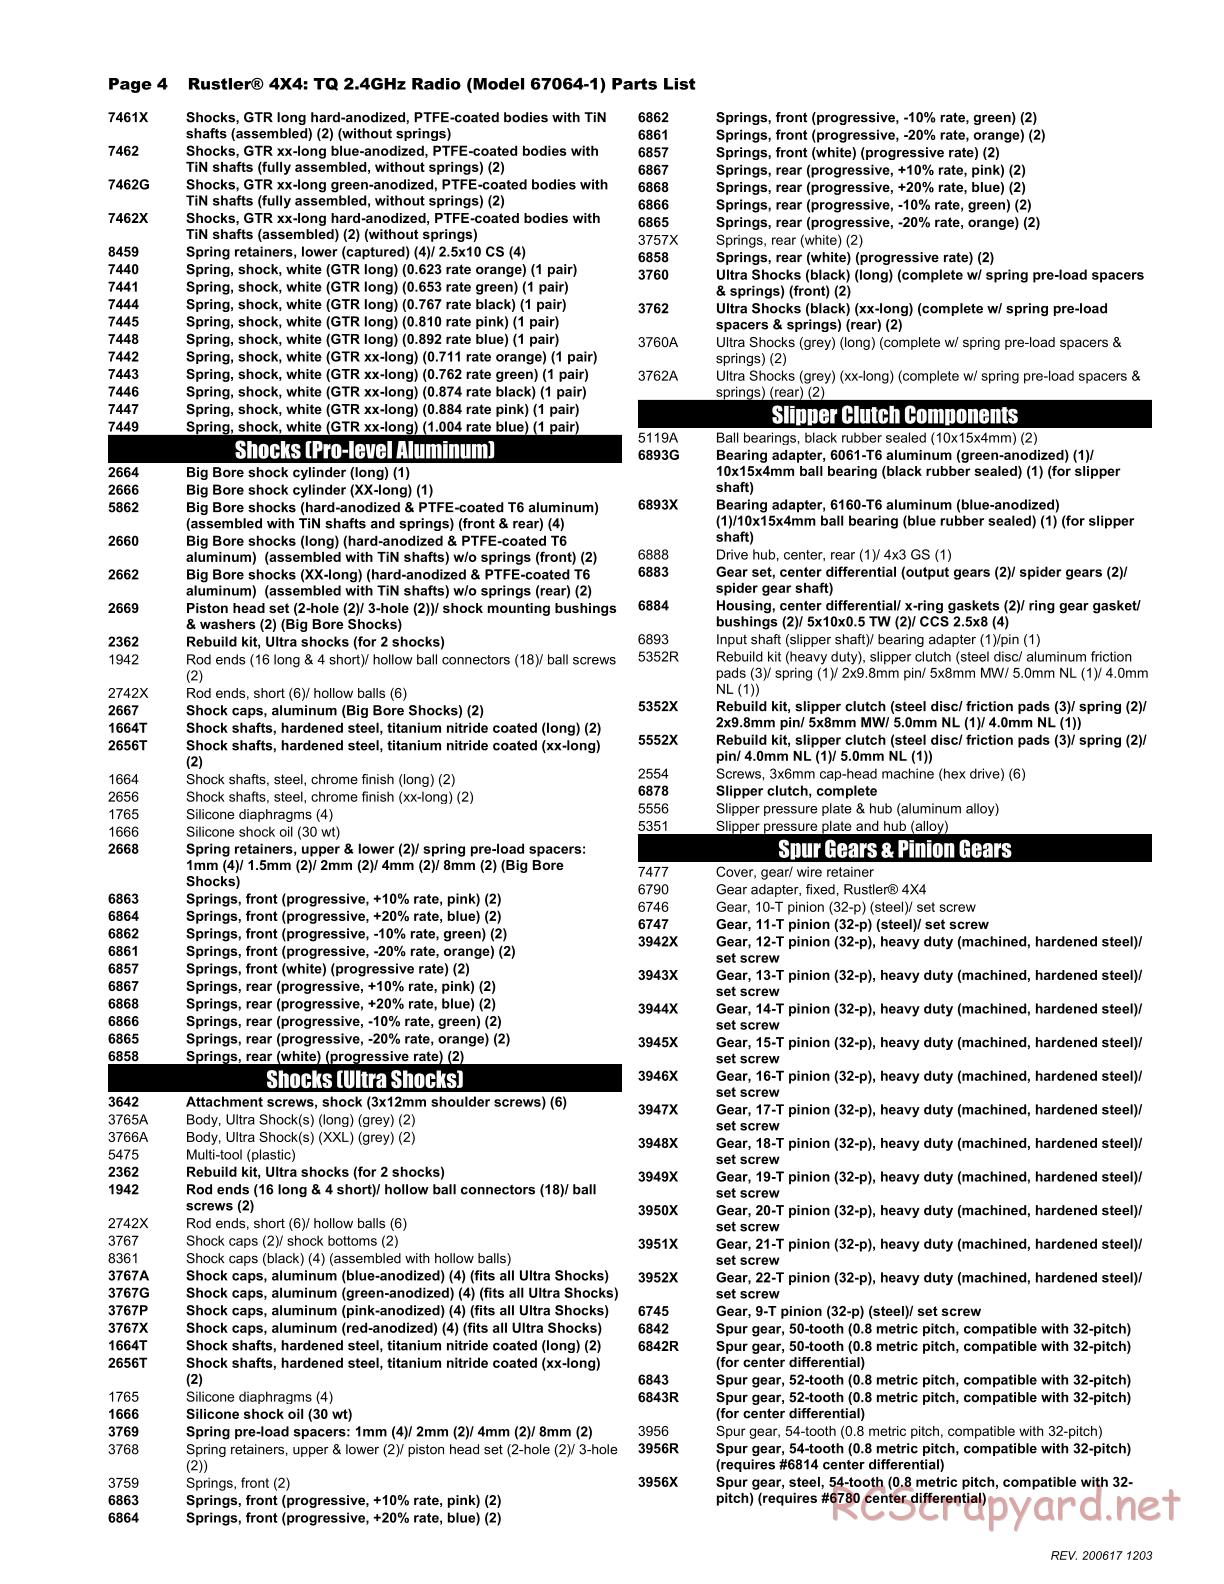 Traxxas - Rustler 4x4 XL-5 - Parts List - Page 4